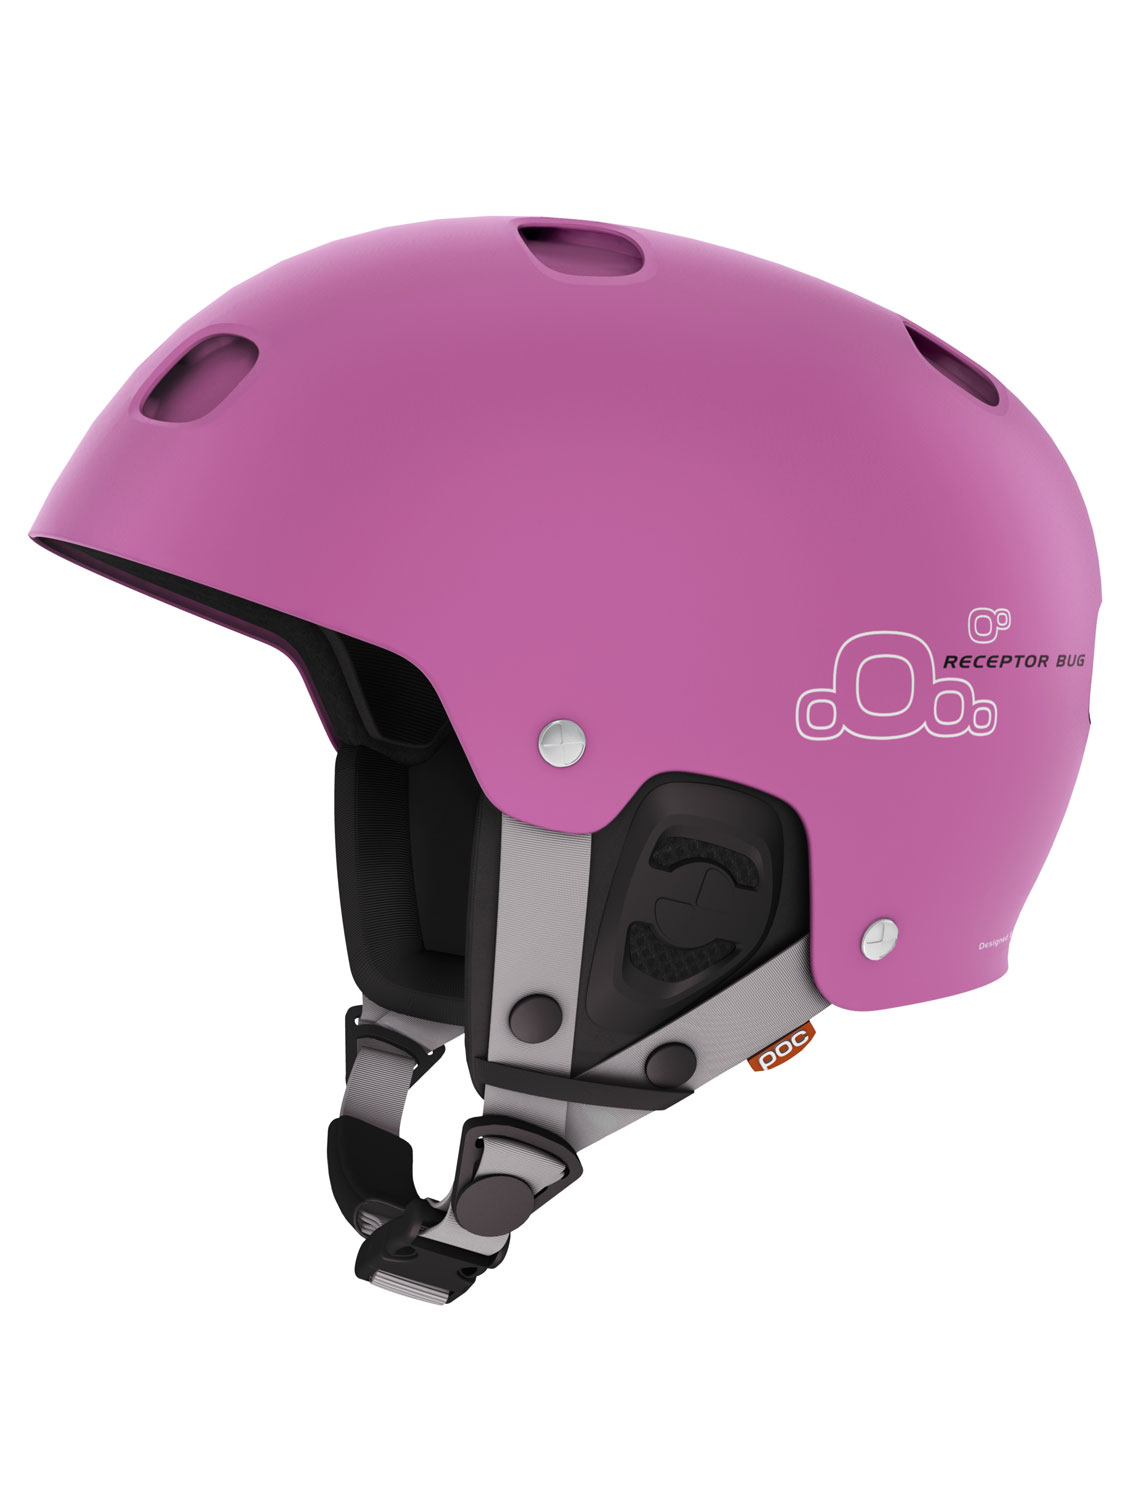 Adults Receptor Bug Helmet Pink